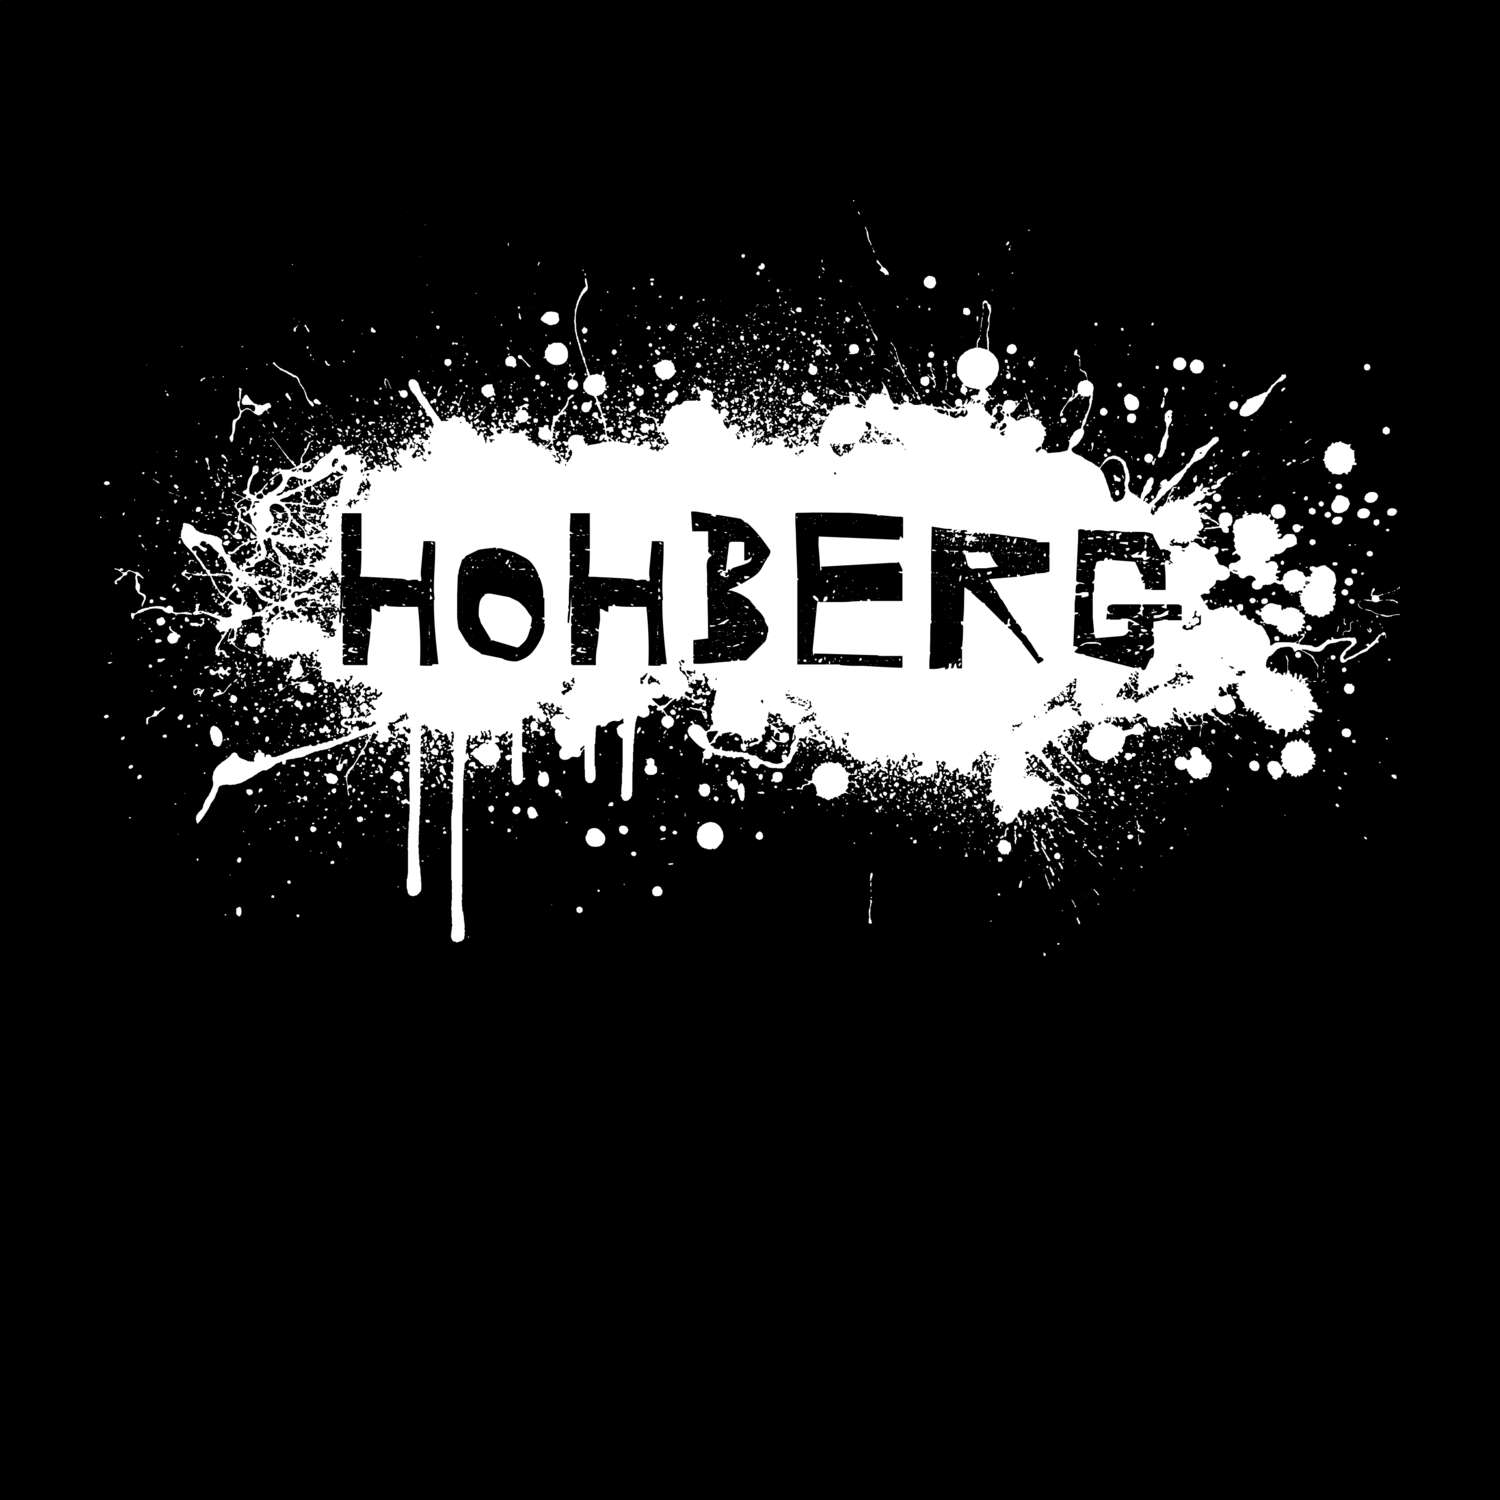 Hohberg T-Shirt »Paint Splash Punk«